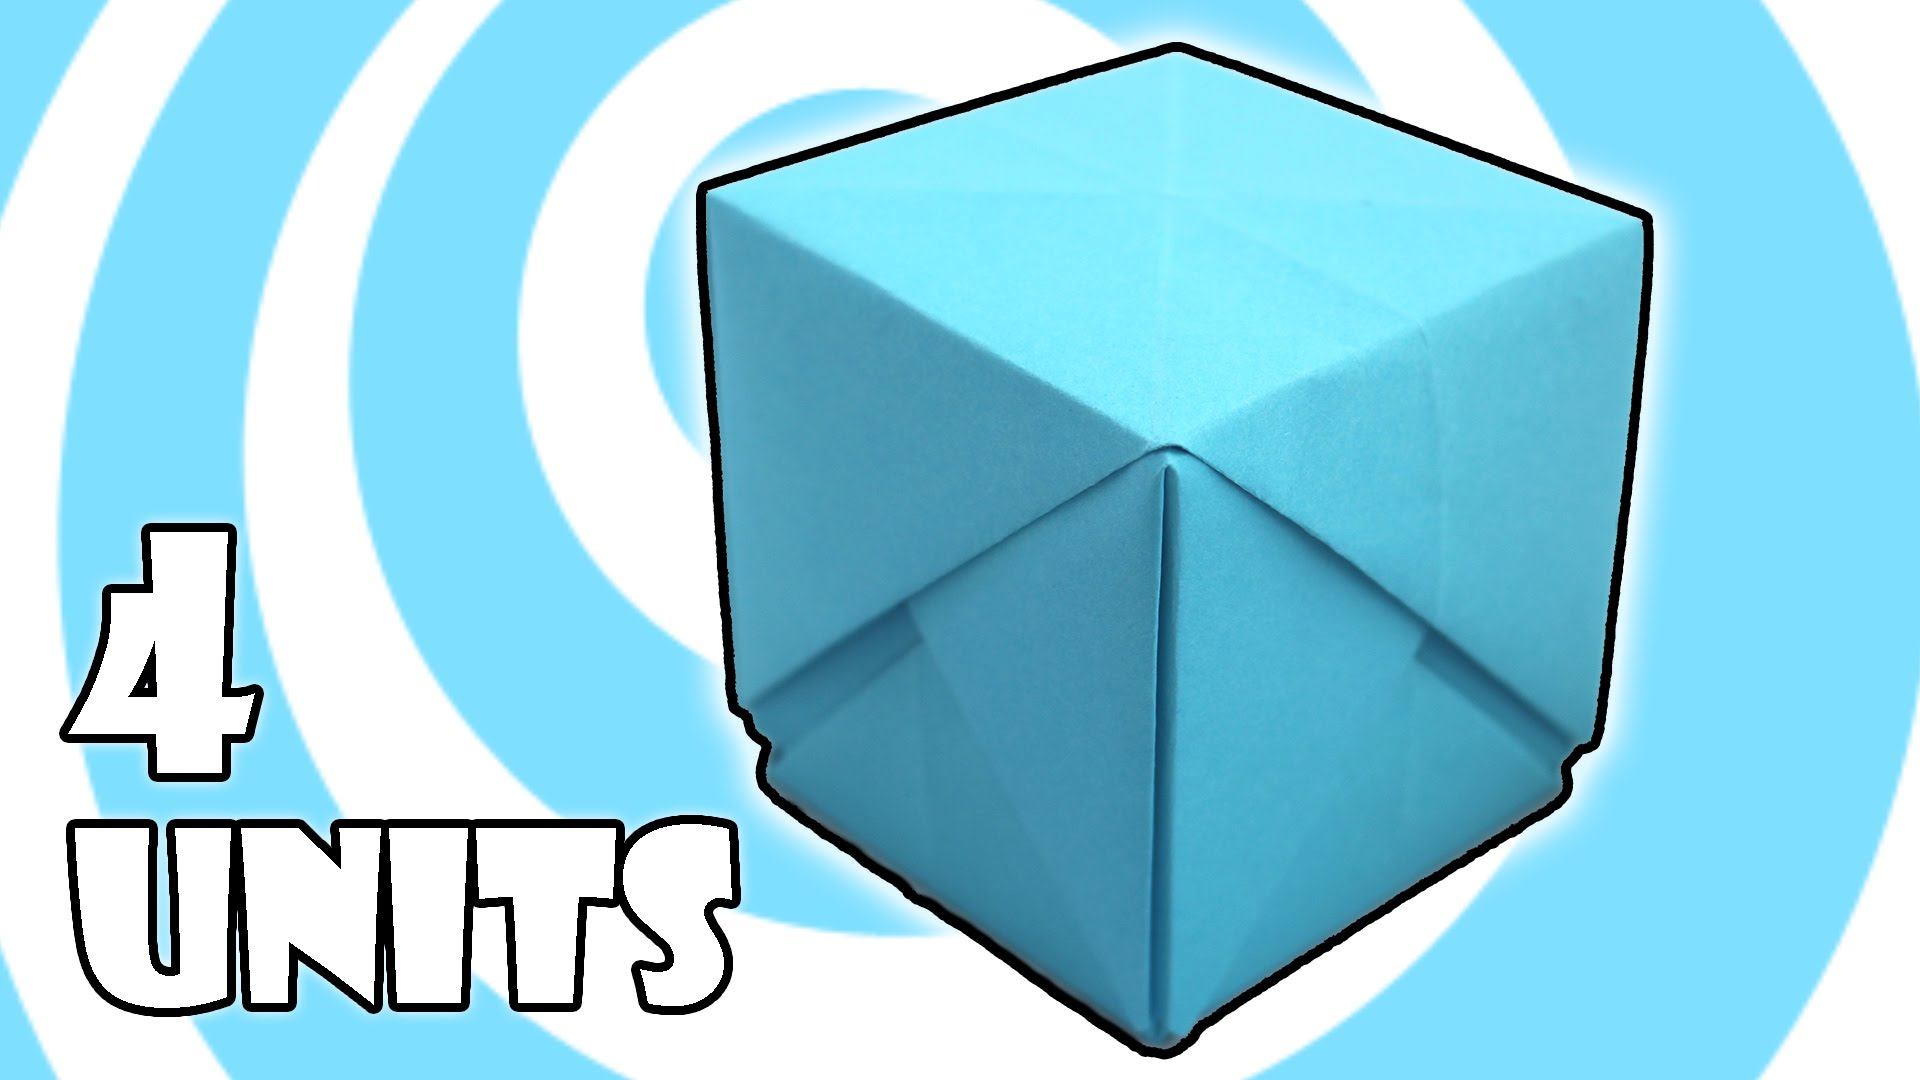 Origami Box Instructions Modular Origami Cube Box Instructions 4 Units Youtube Easy